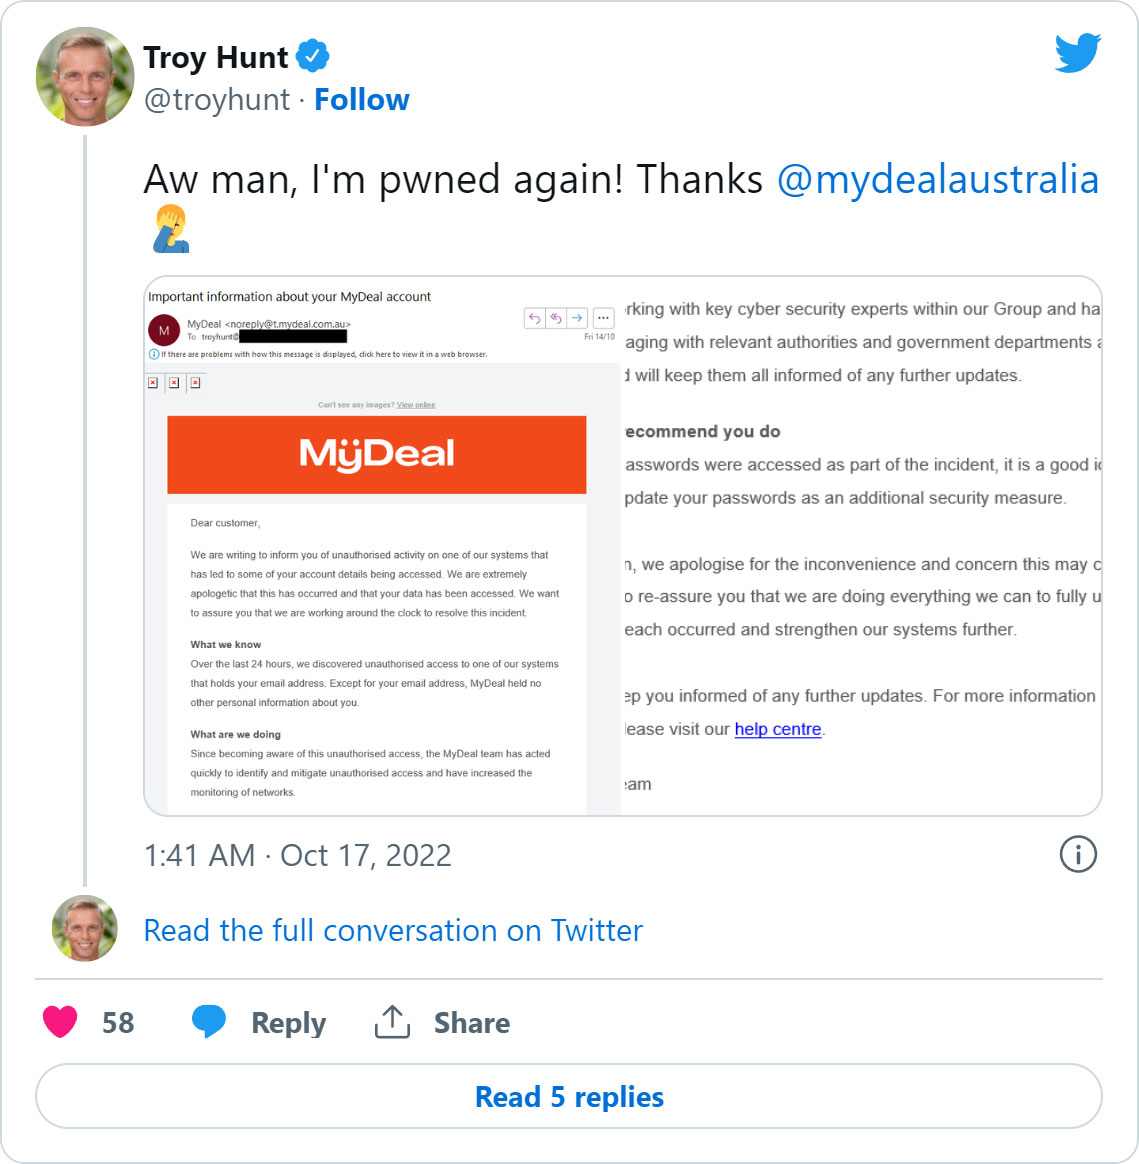 Mysql data breach notification sent to Troy Hunt